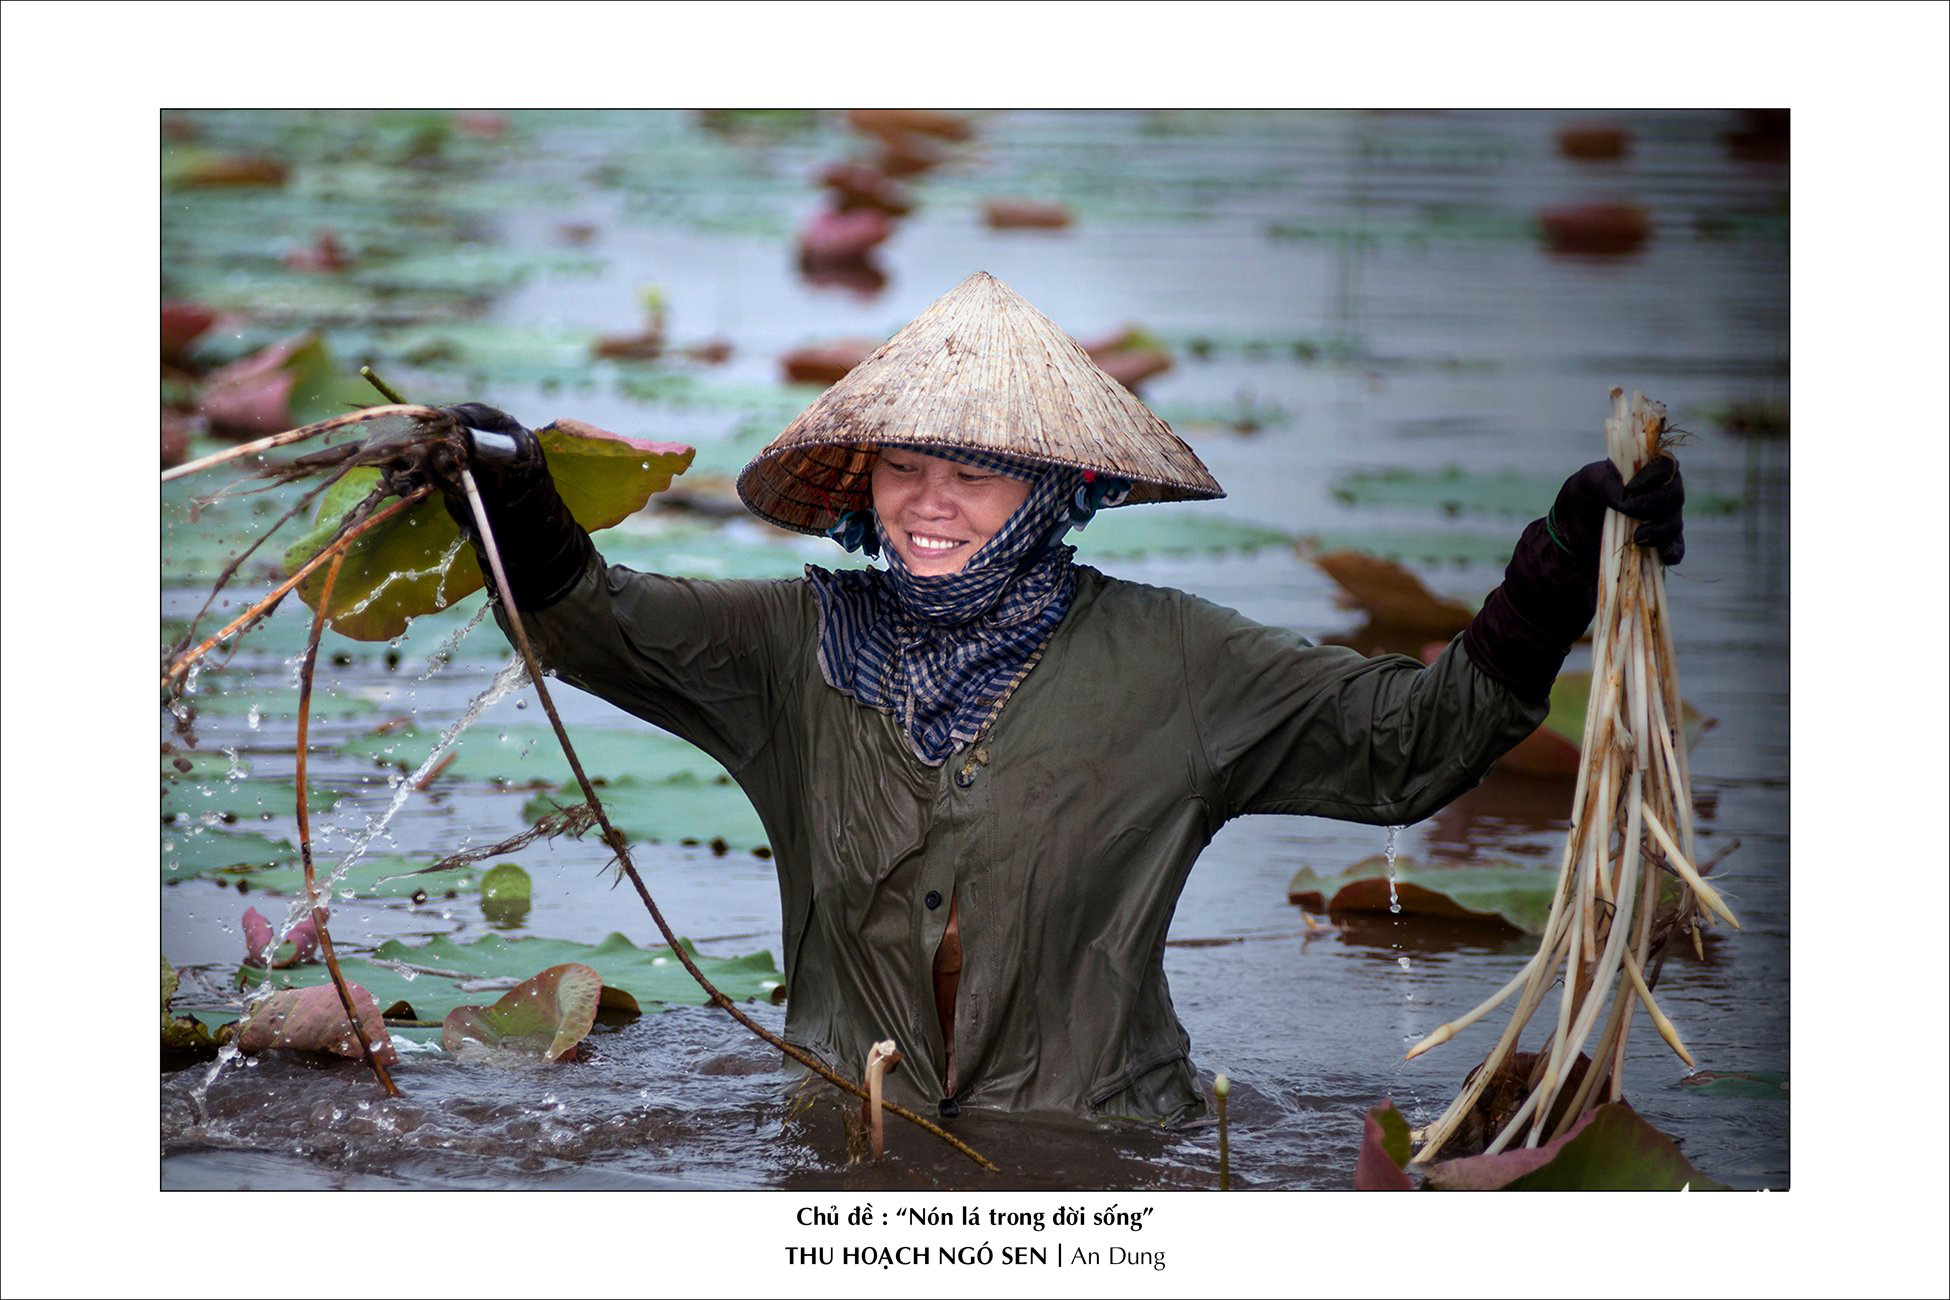 Female photographers showcase ‘non la’ photos at Ho Chi Minh City exhibition